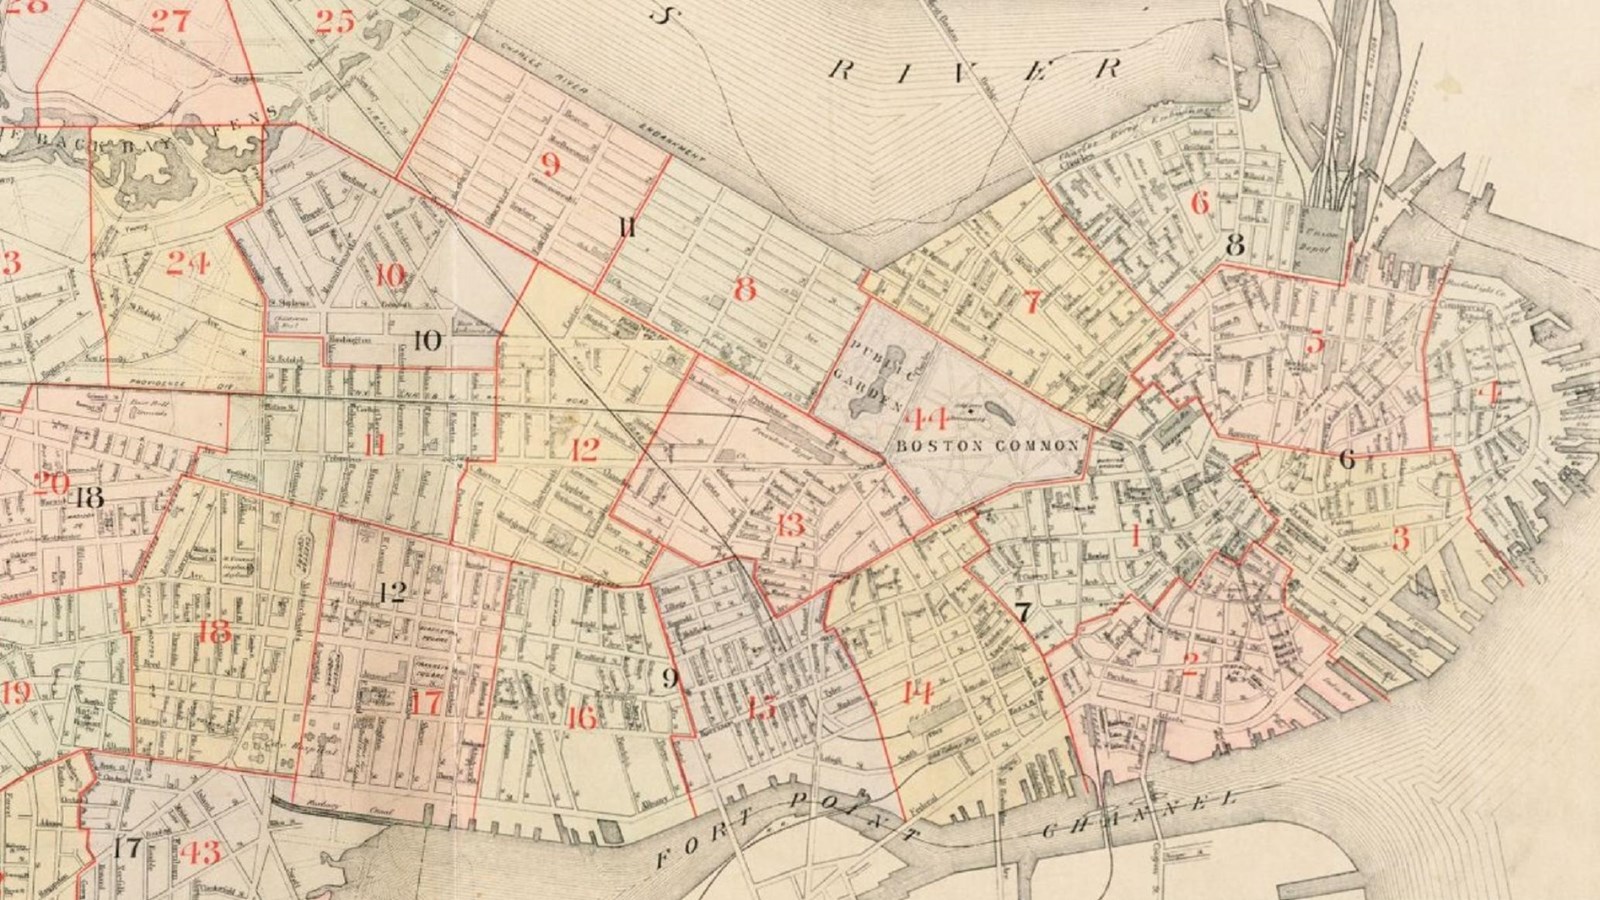 1895 atlas map of Boston: Boston proper and Roxbury.